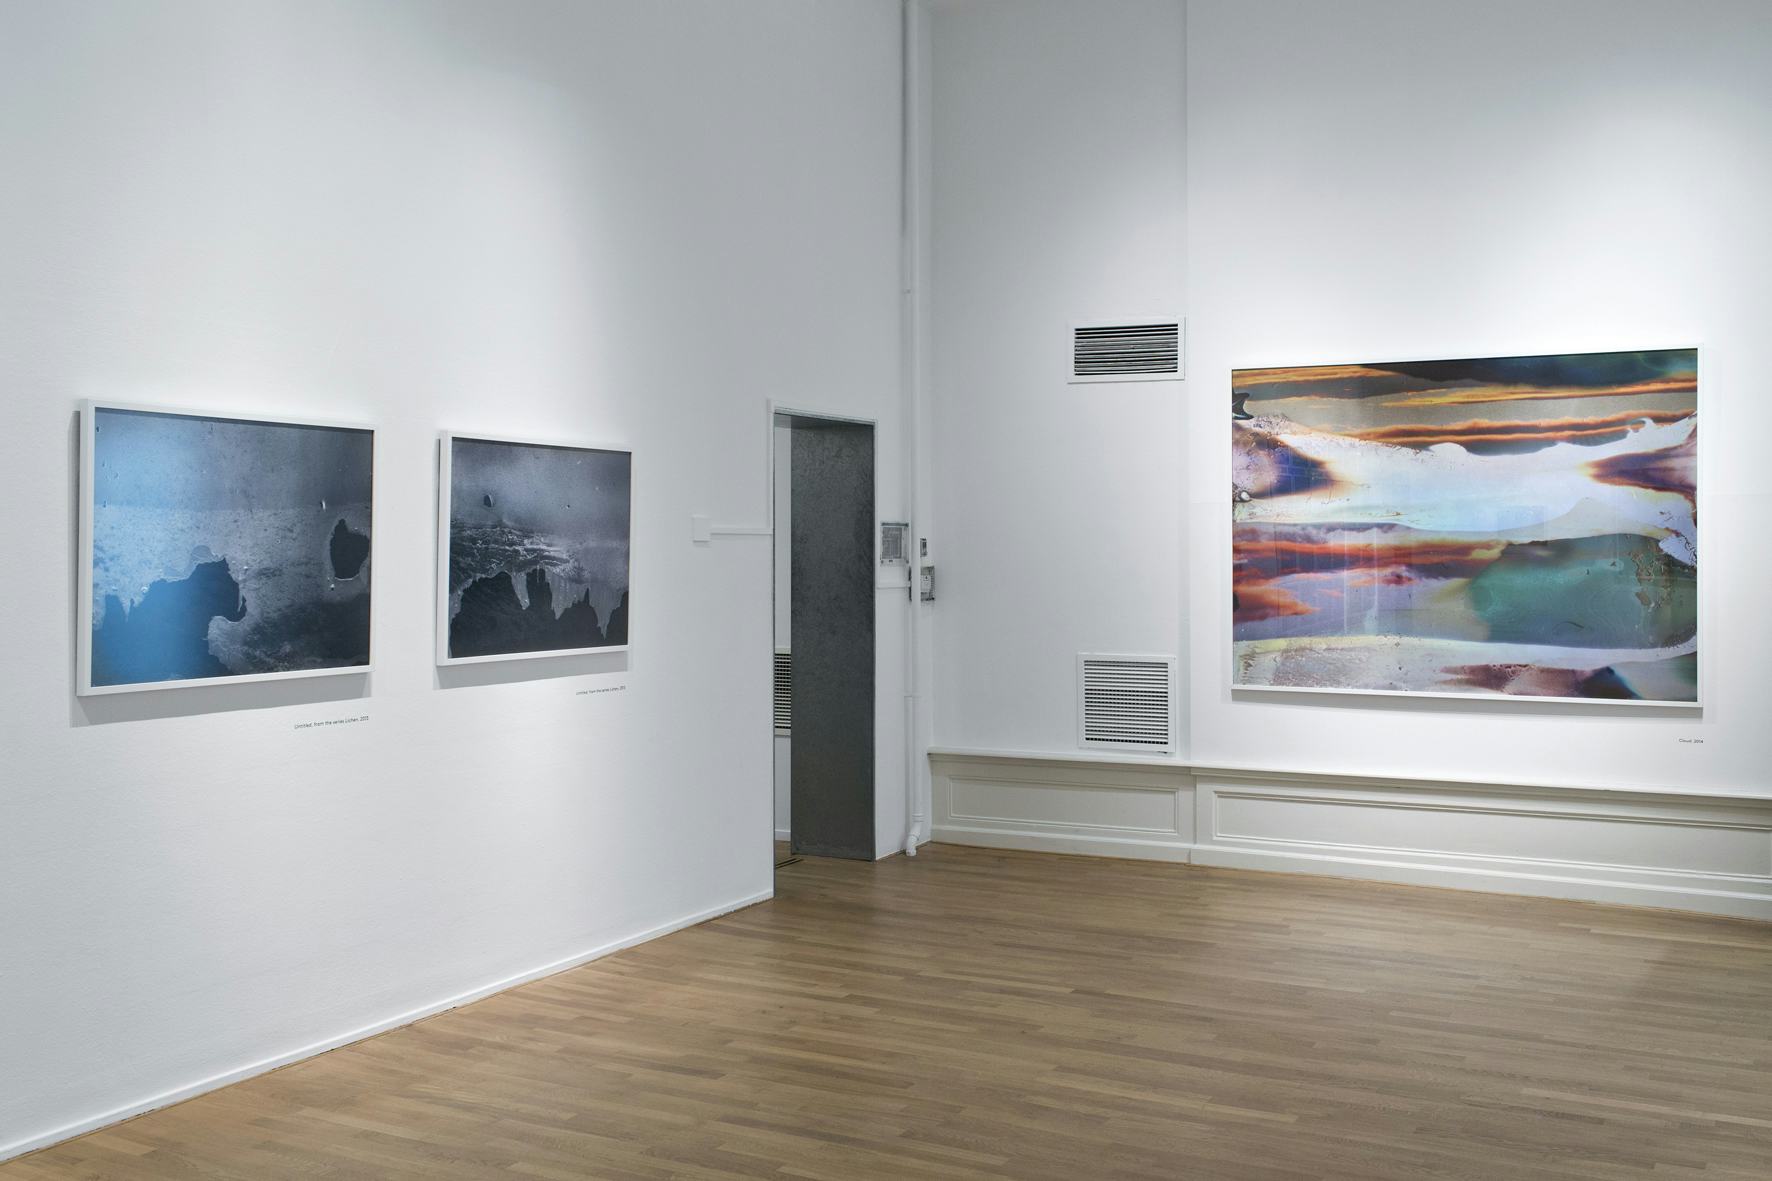 Image of the exhibition Site/Cloud by Daisuke Yokota at Foam Fotografiemuseum Amsterdam